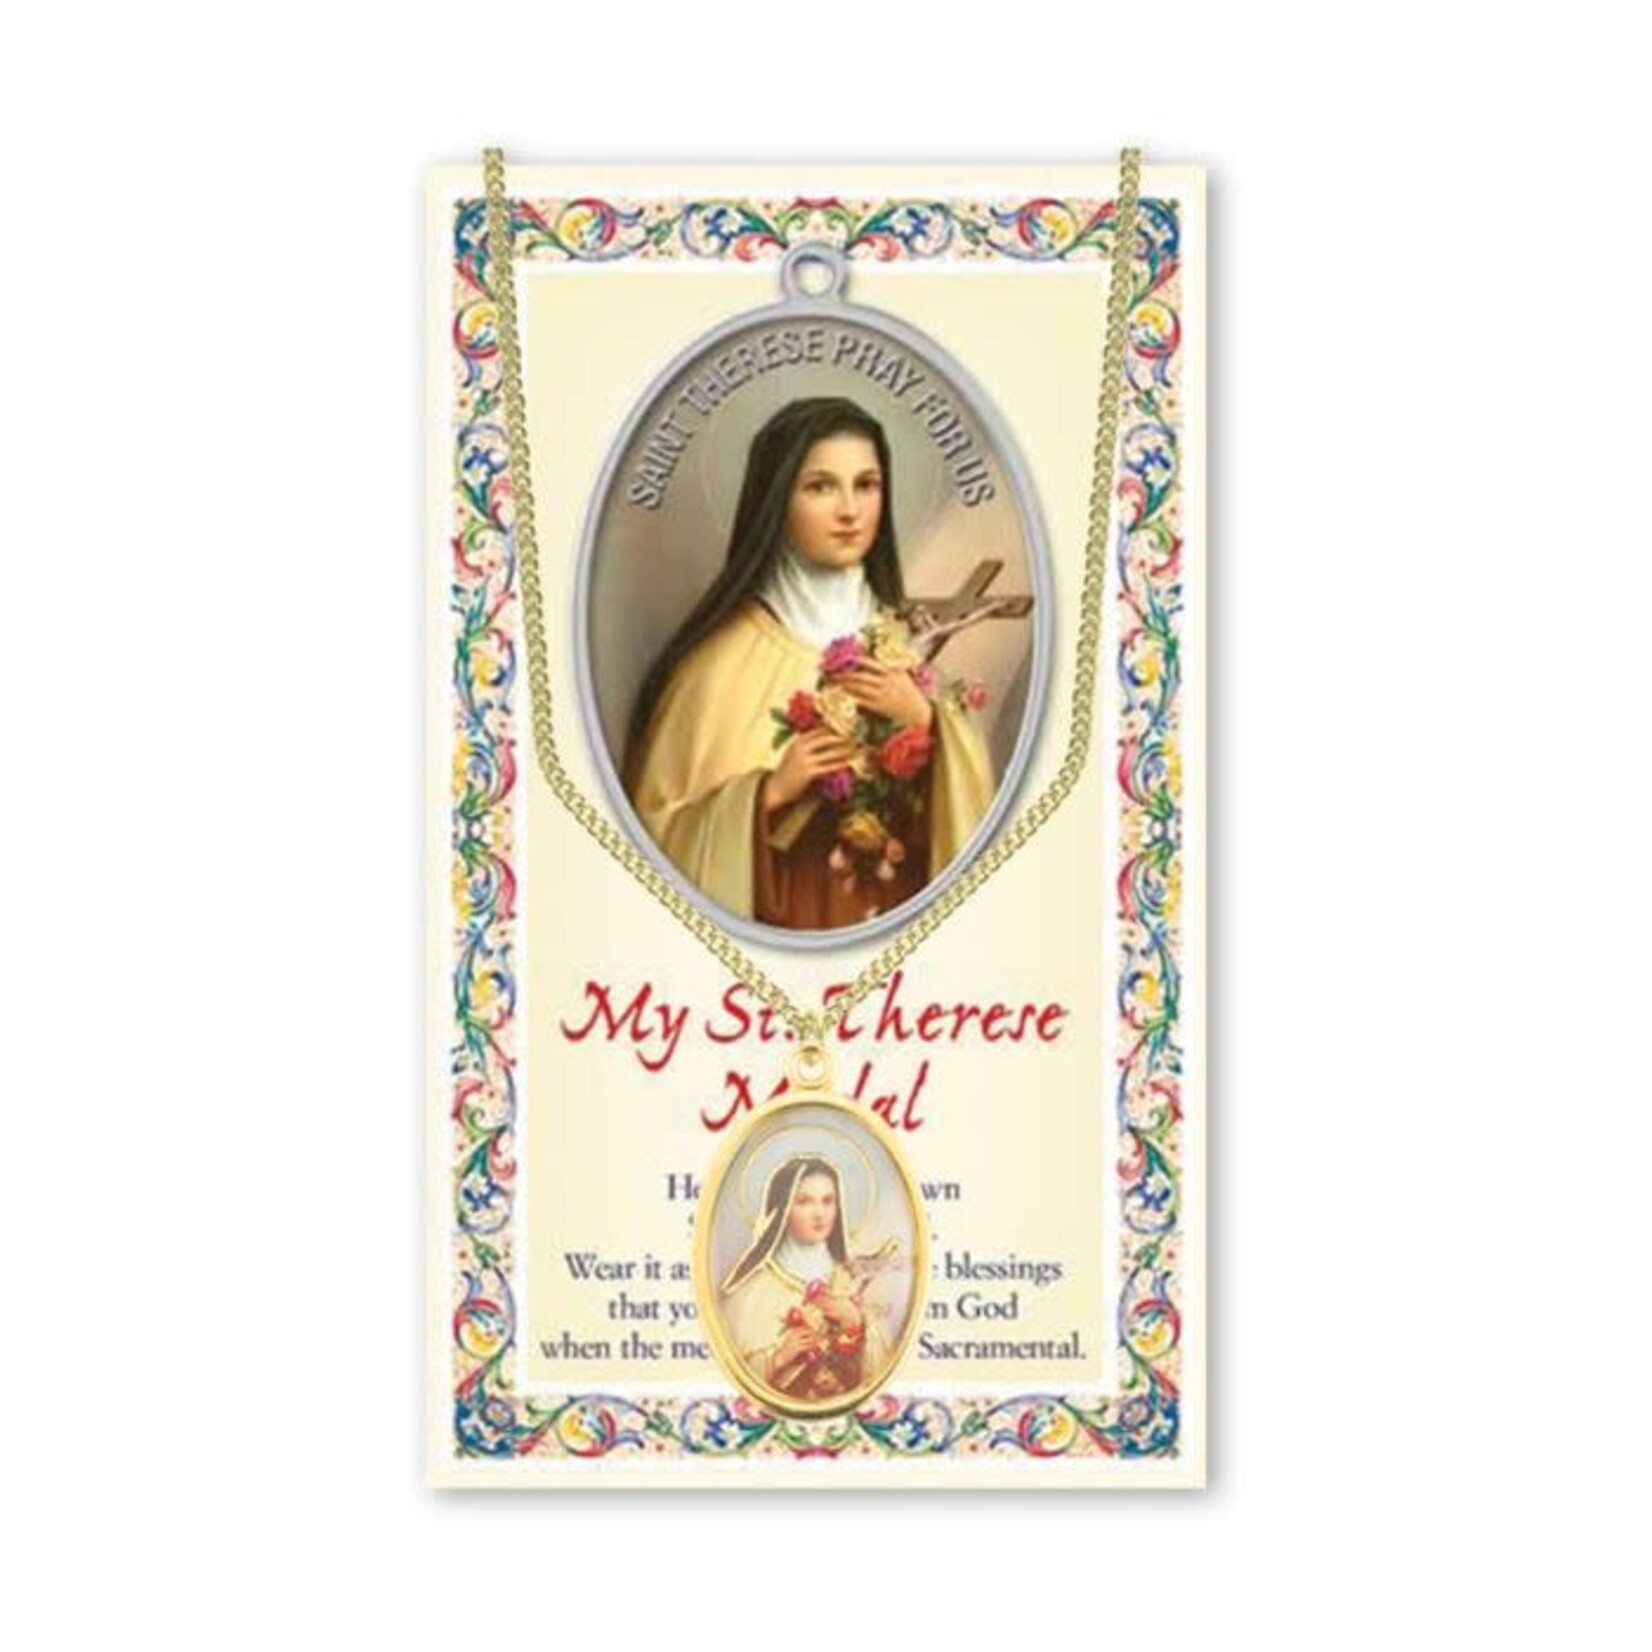 Saint Therese of Lisieux Patron Saint Medal